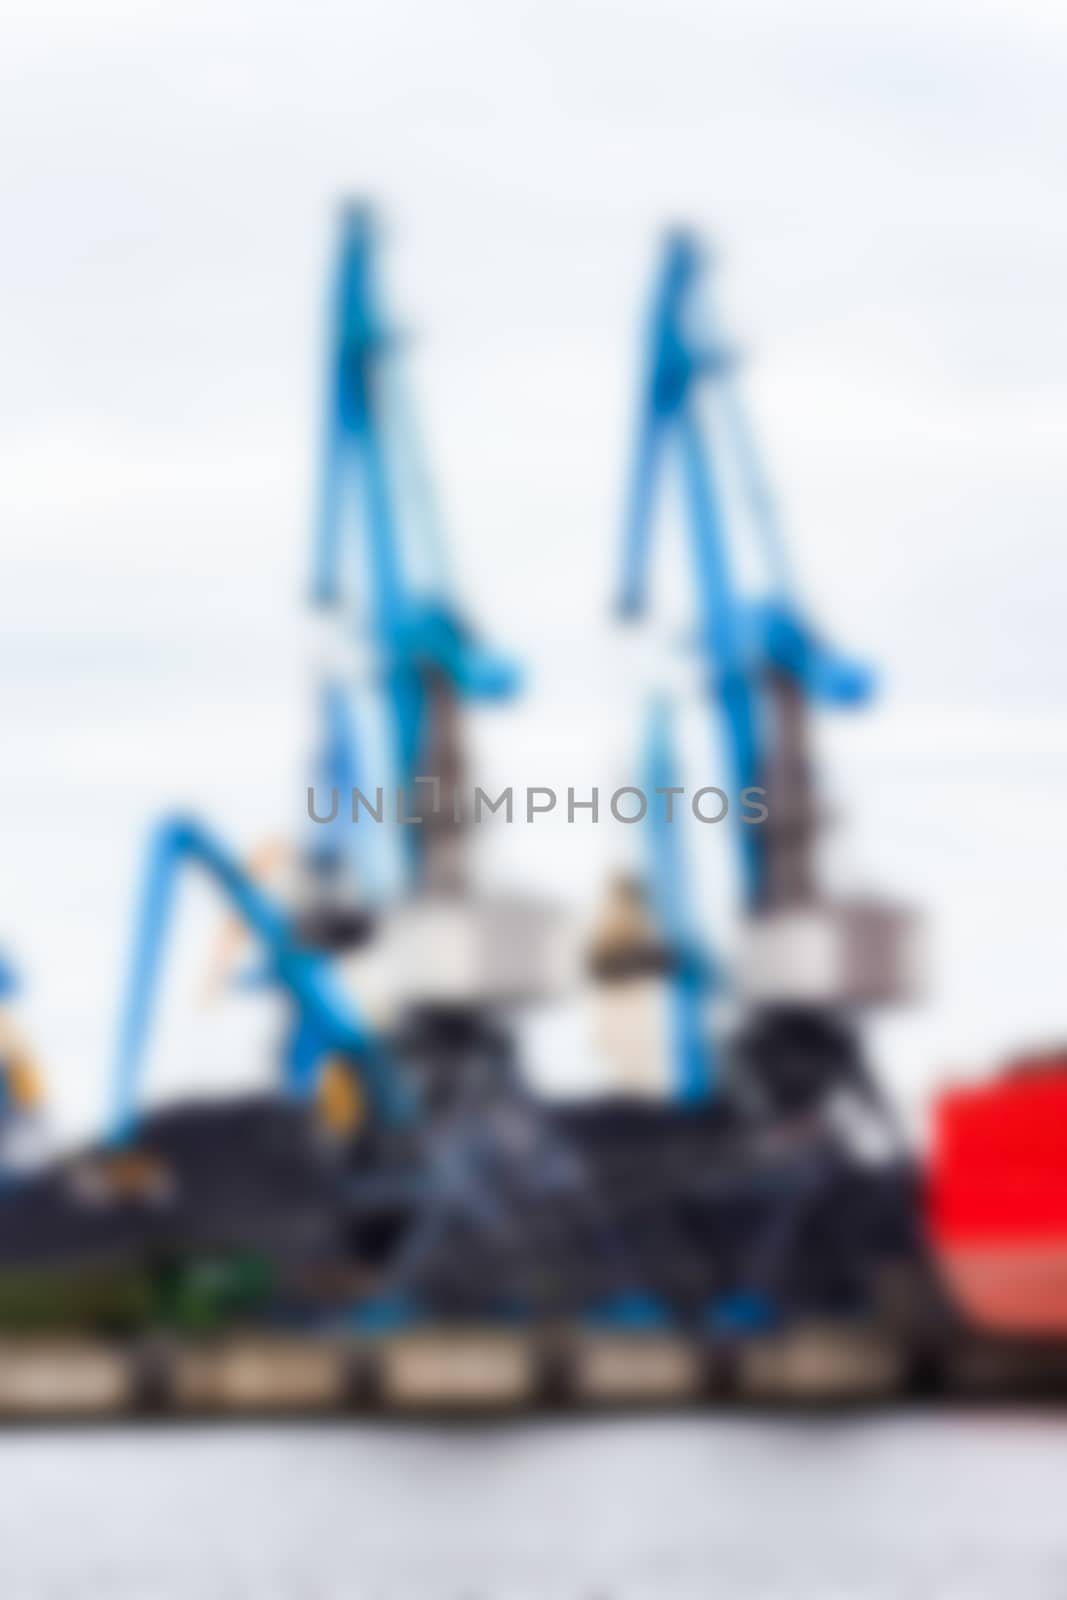 Portal cargo cranes - blurred image by sengnsp